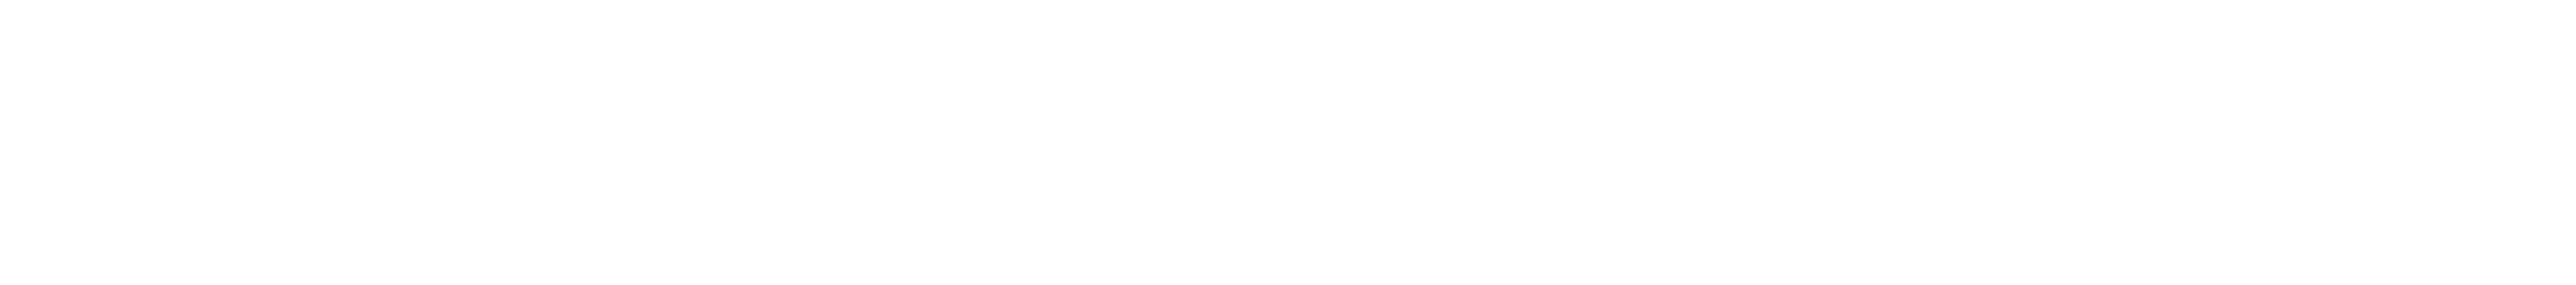 Innovationsfonden_Logo_ENG_White_RGB